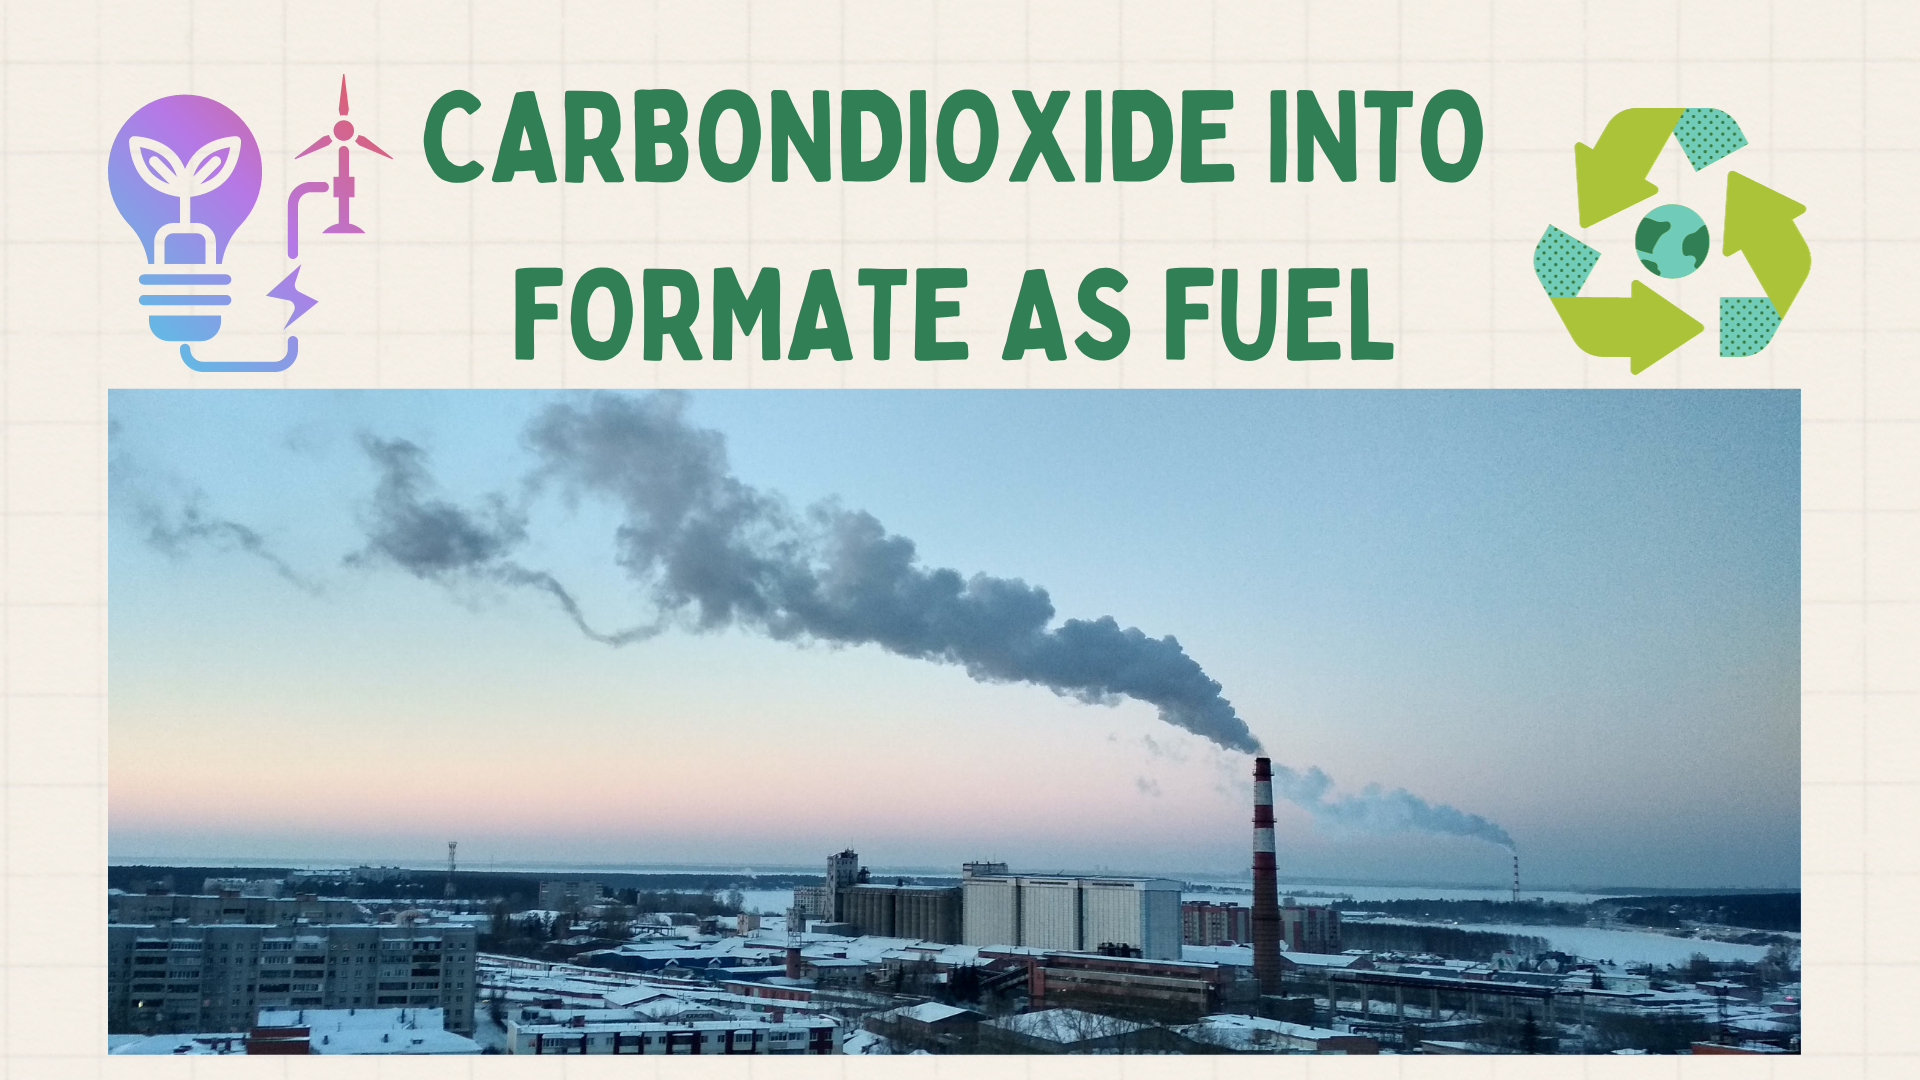 Carbondioxide into Formate as fuel.